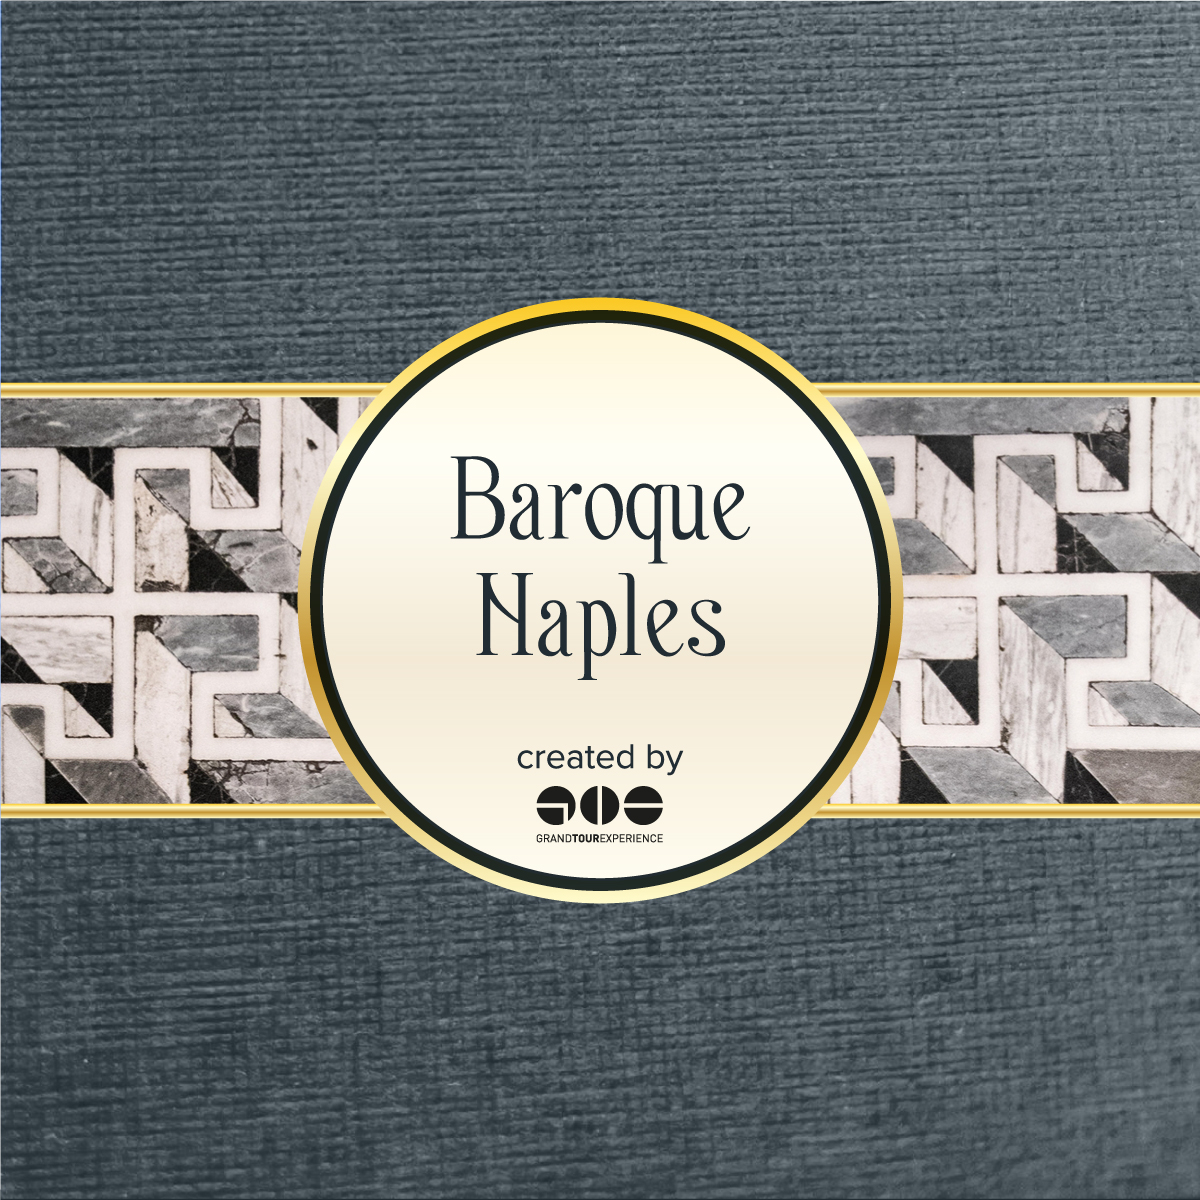 Baroque Naples: the Golden Age